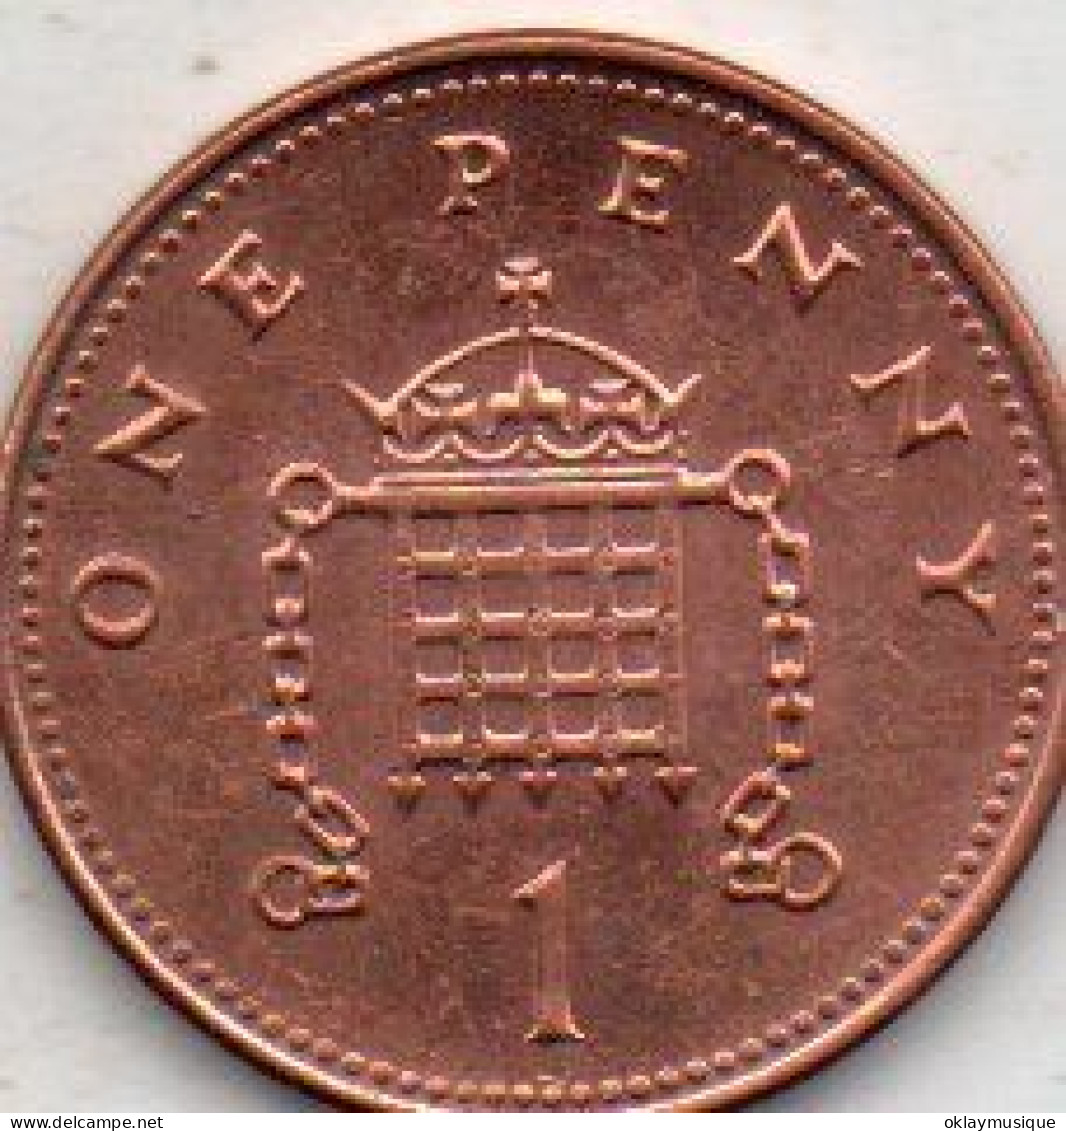 1 New Penny 2006 - 1 Penny & 1 New Penny